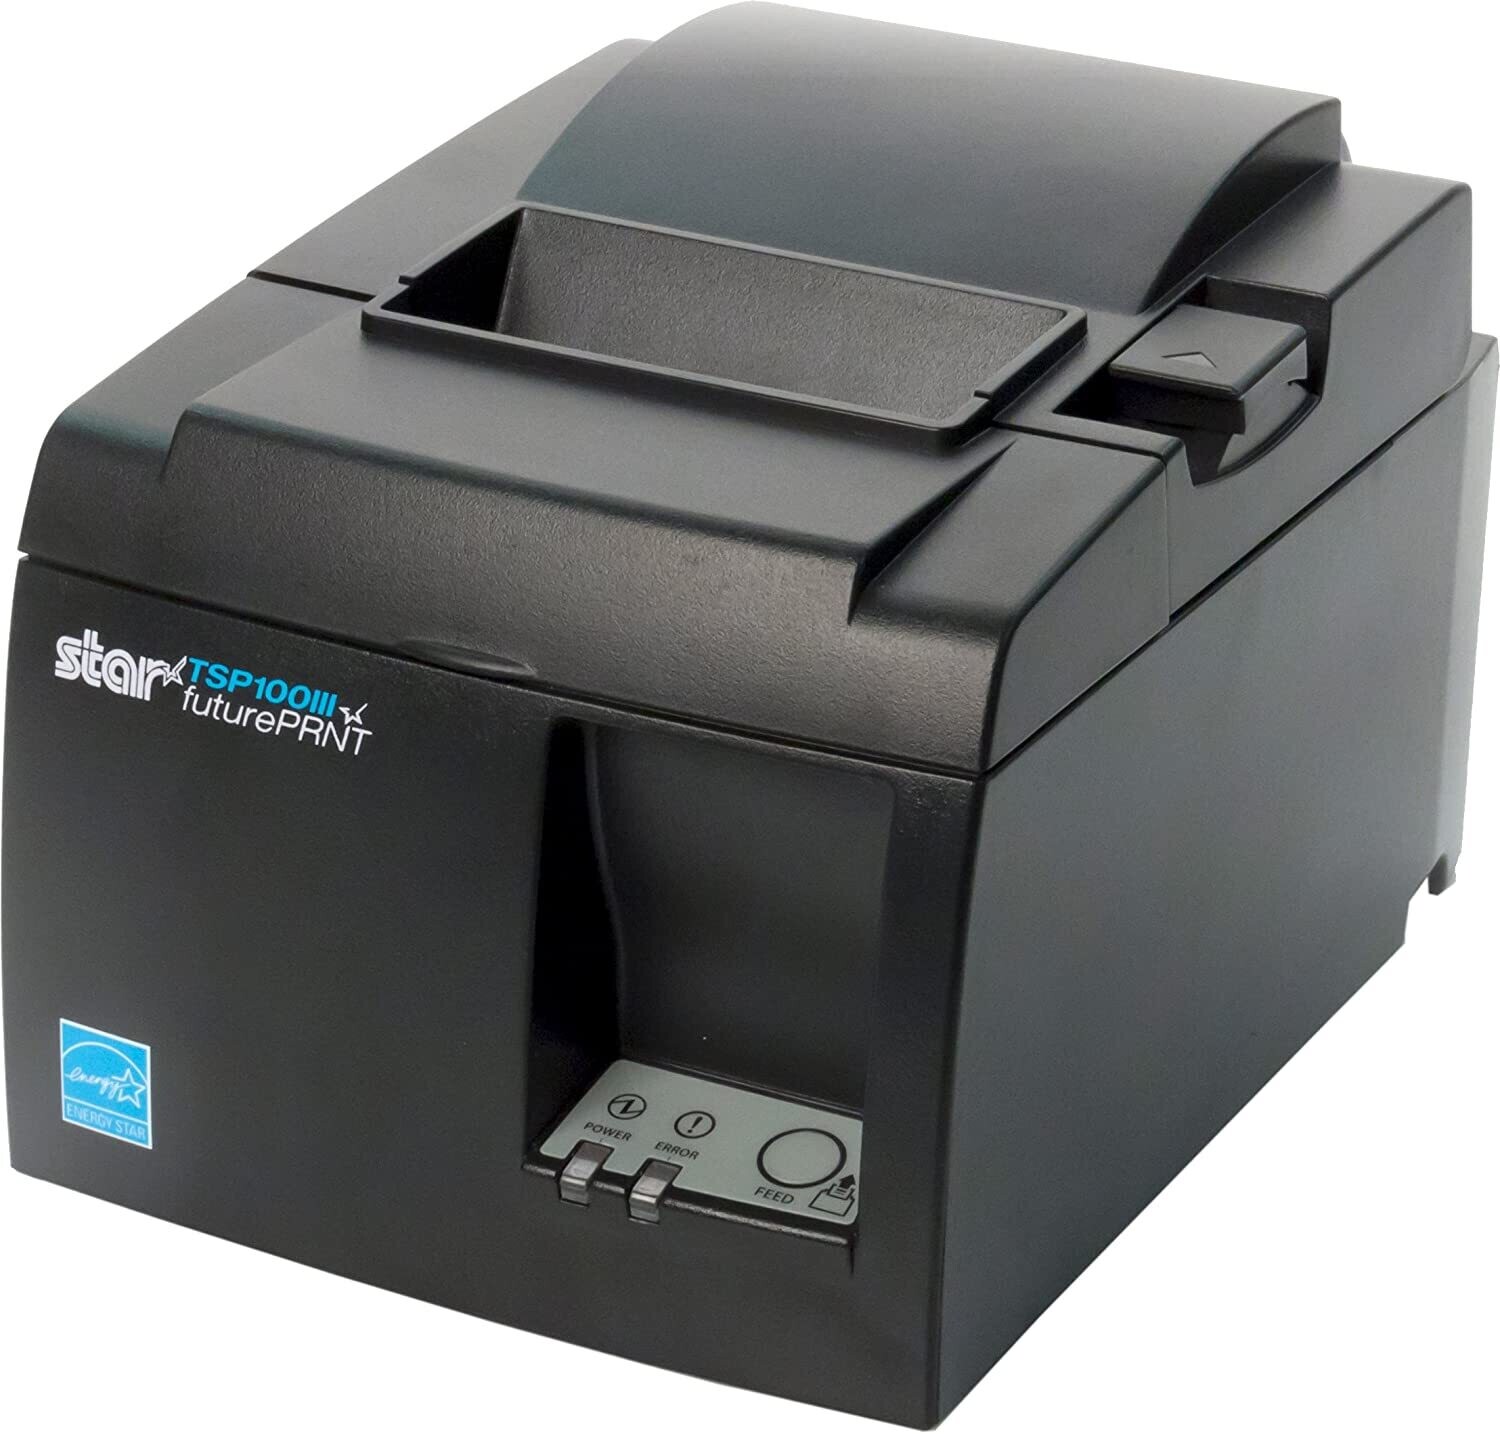 Star Micronics Thermal Printer TSP 1000